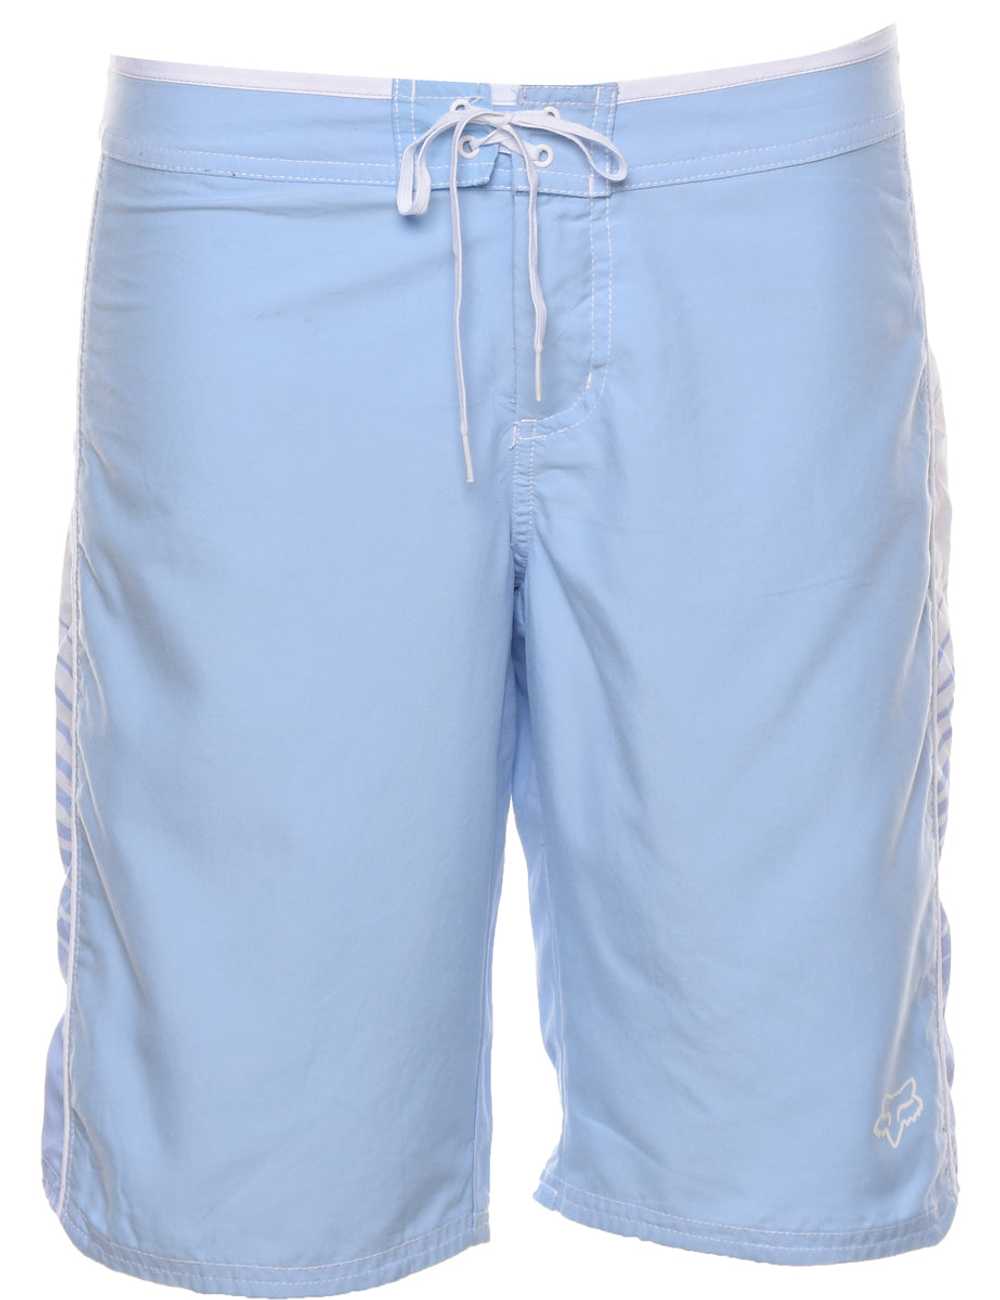 Light Blue Shorts - W30 L10 - image 1